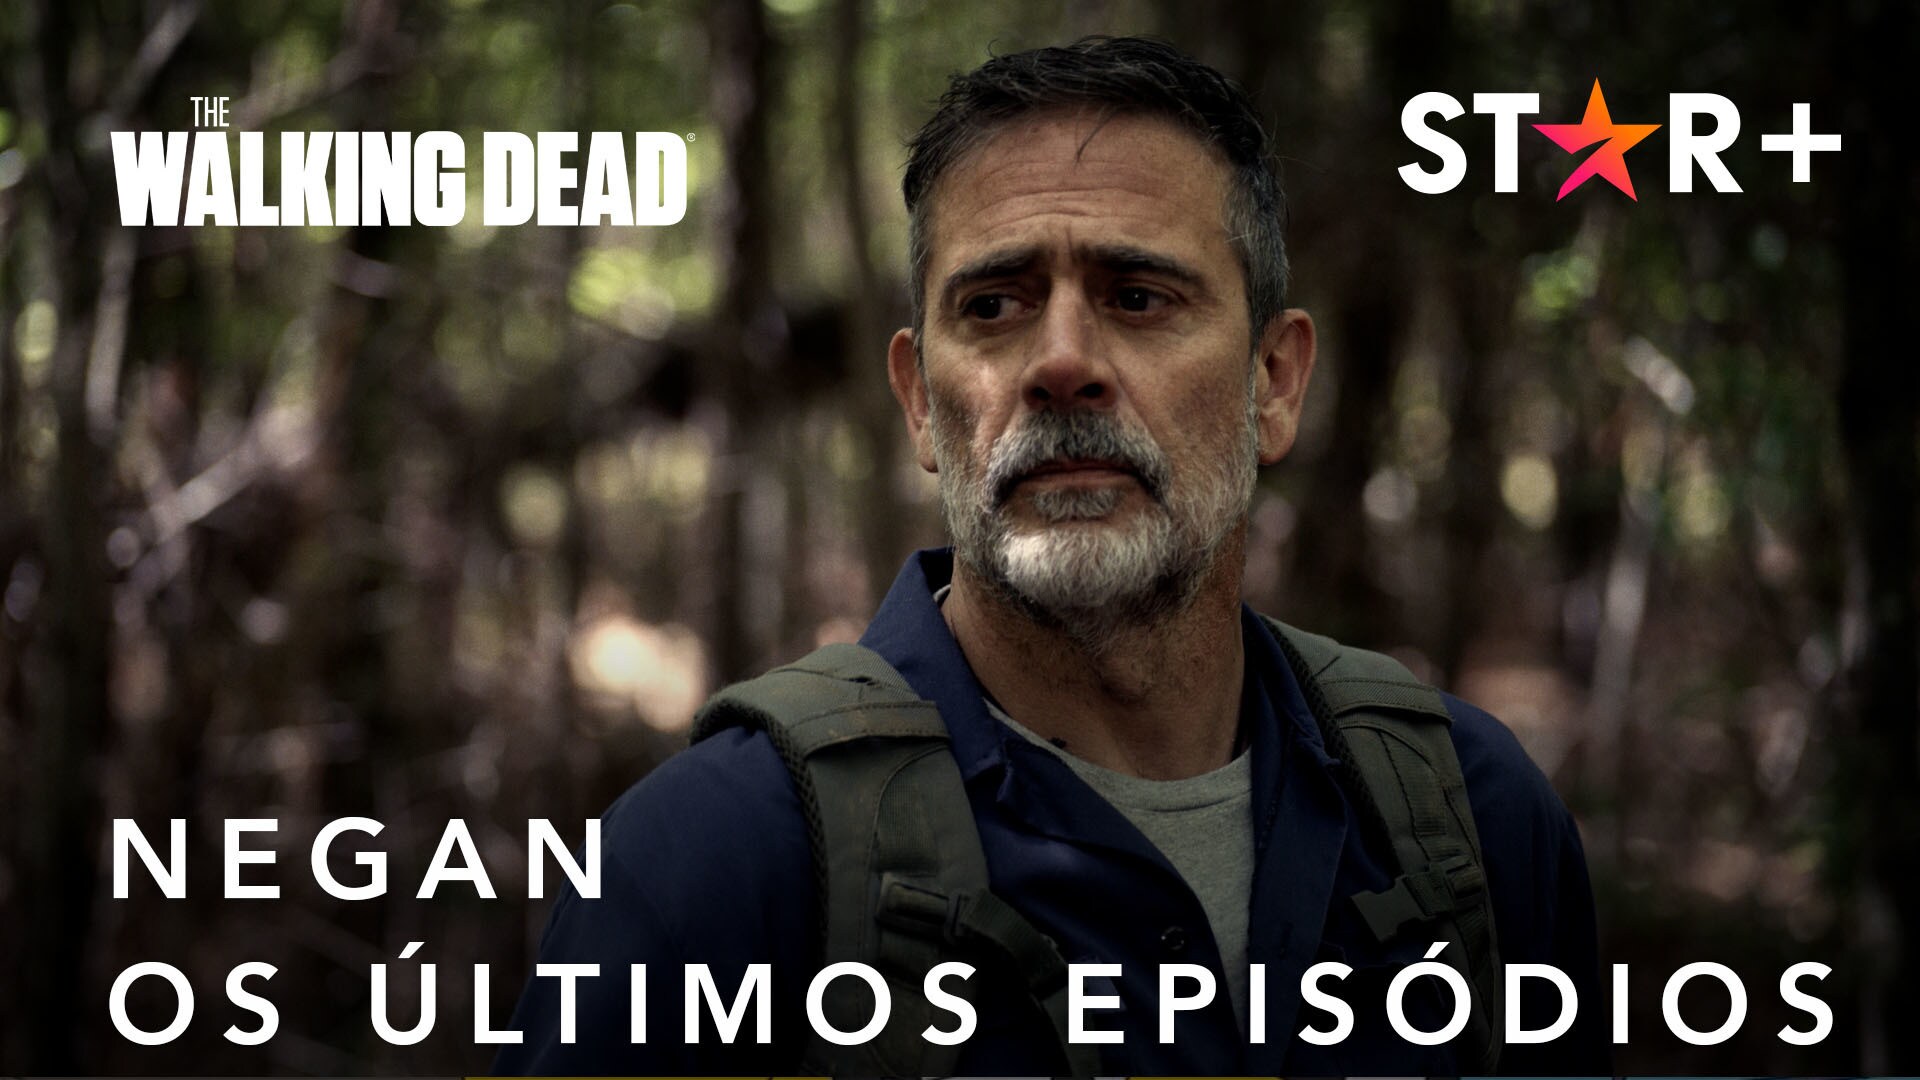 The Walking Dead | Negan | Os Últimos Episódios | Star+